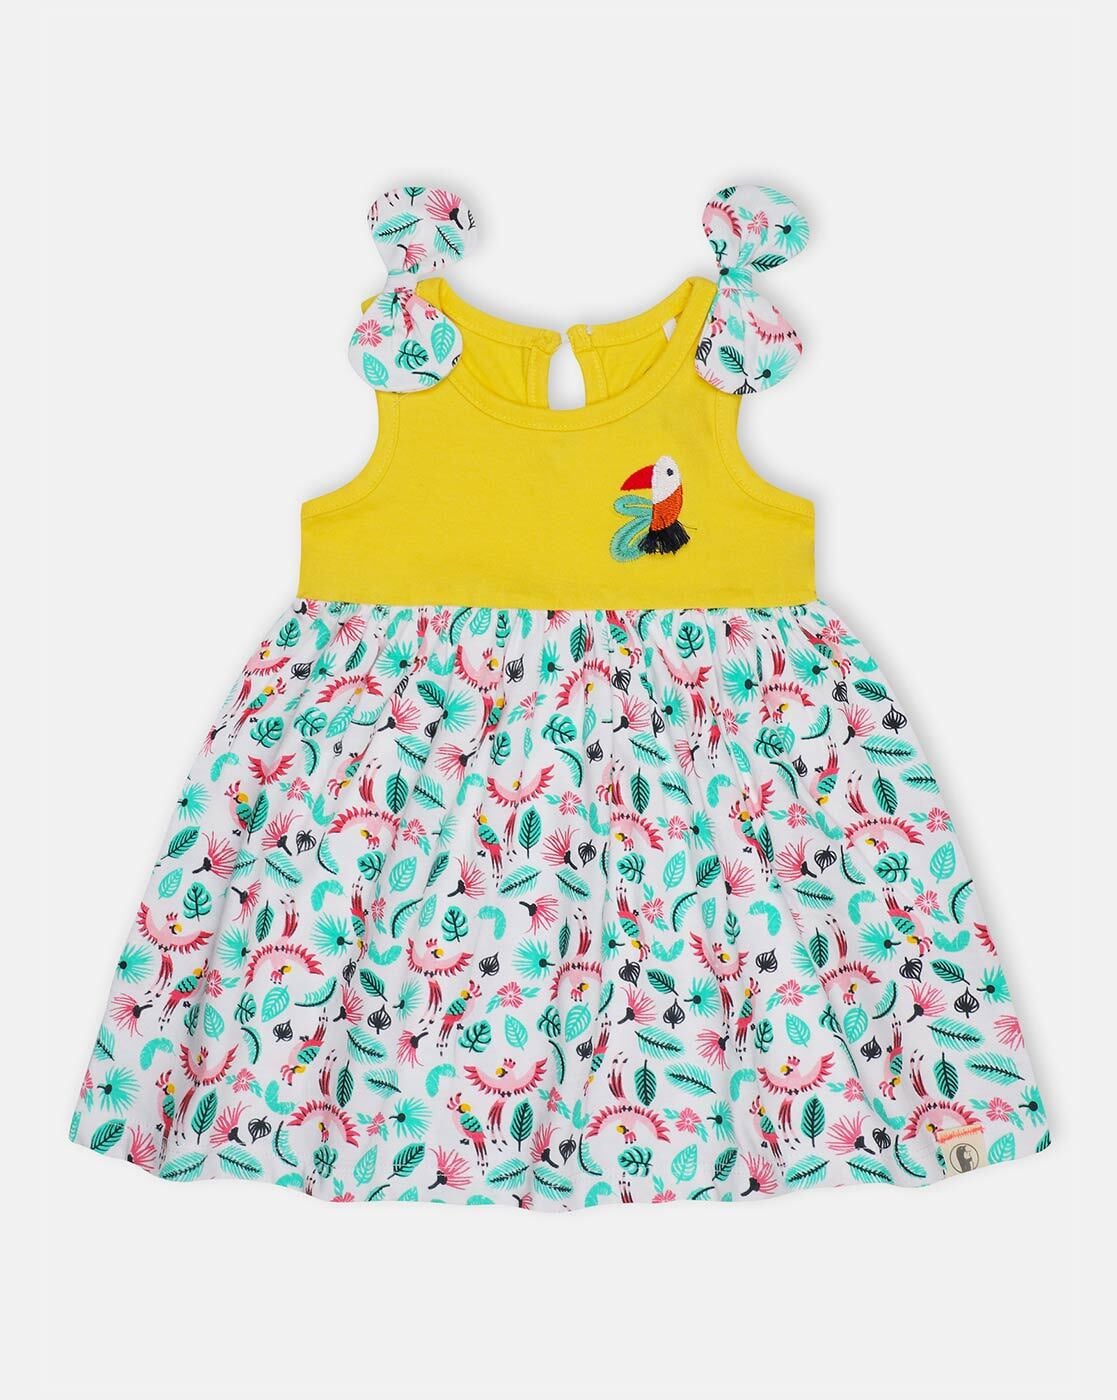 Baby Girls ALine Mini Frock Dress Round Neck Frock Print